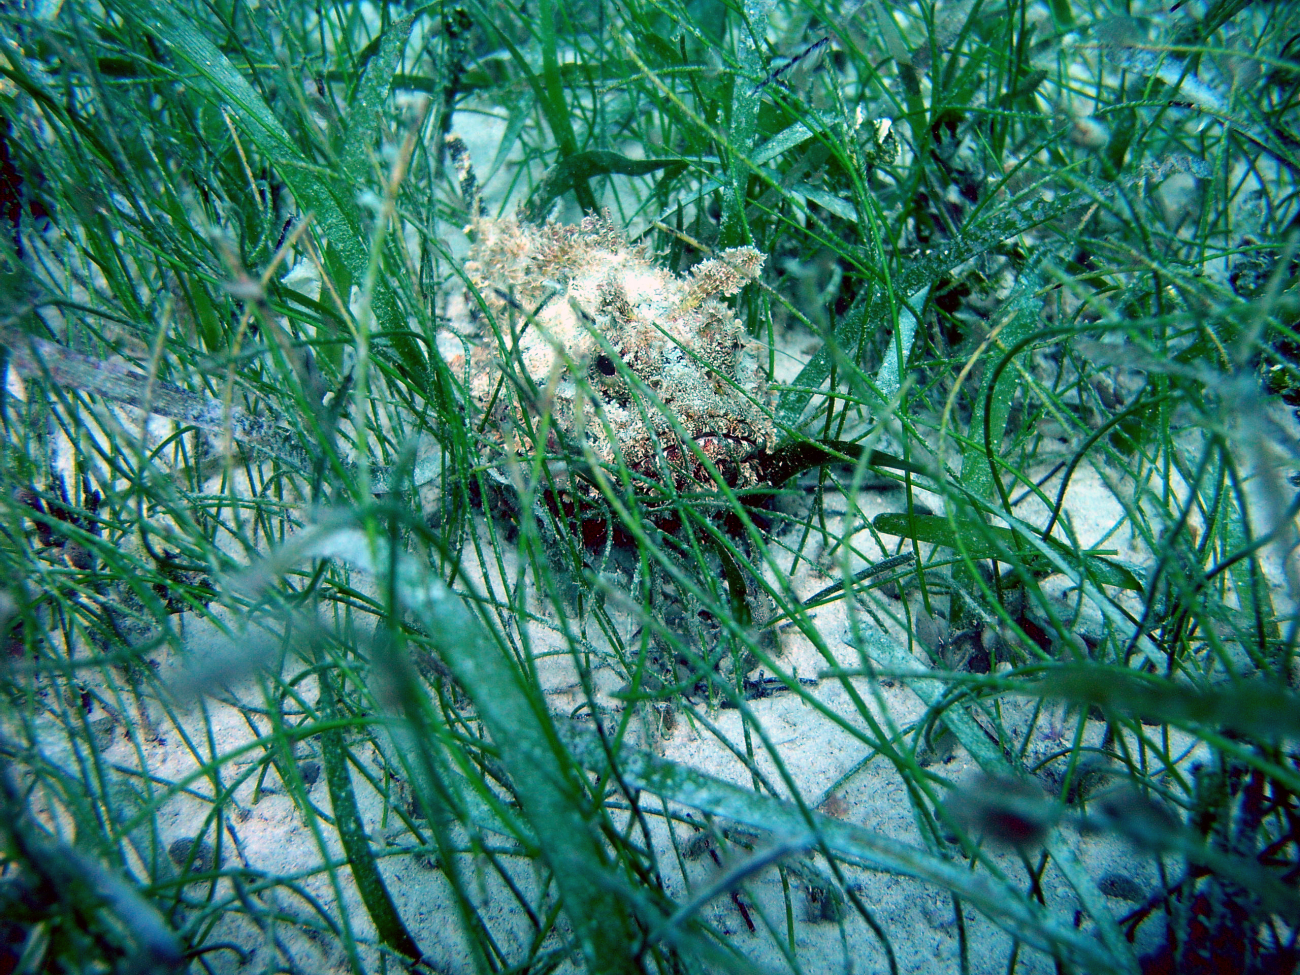 Spotted scorpionfish (Scorpaena plumieri) in manatee grass (Syringodiumisoetifolium)